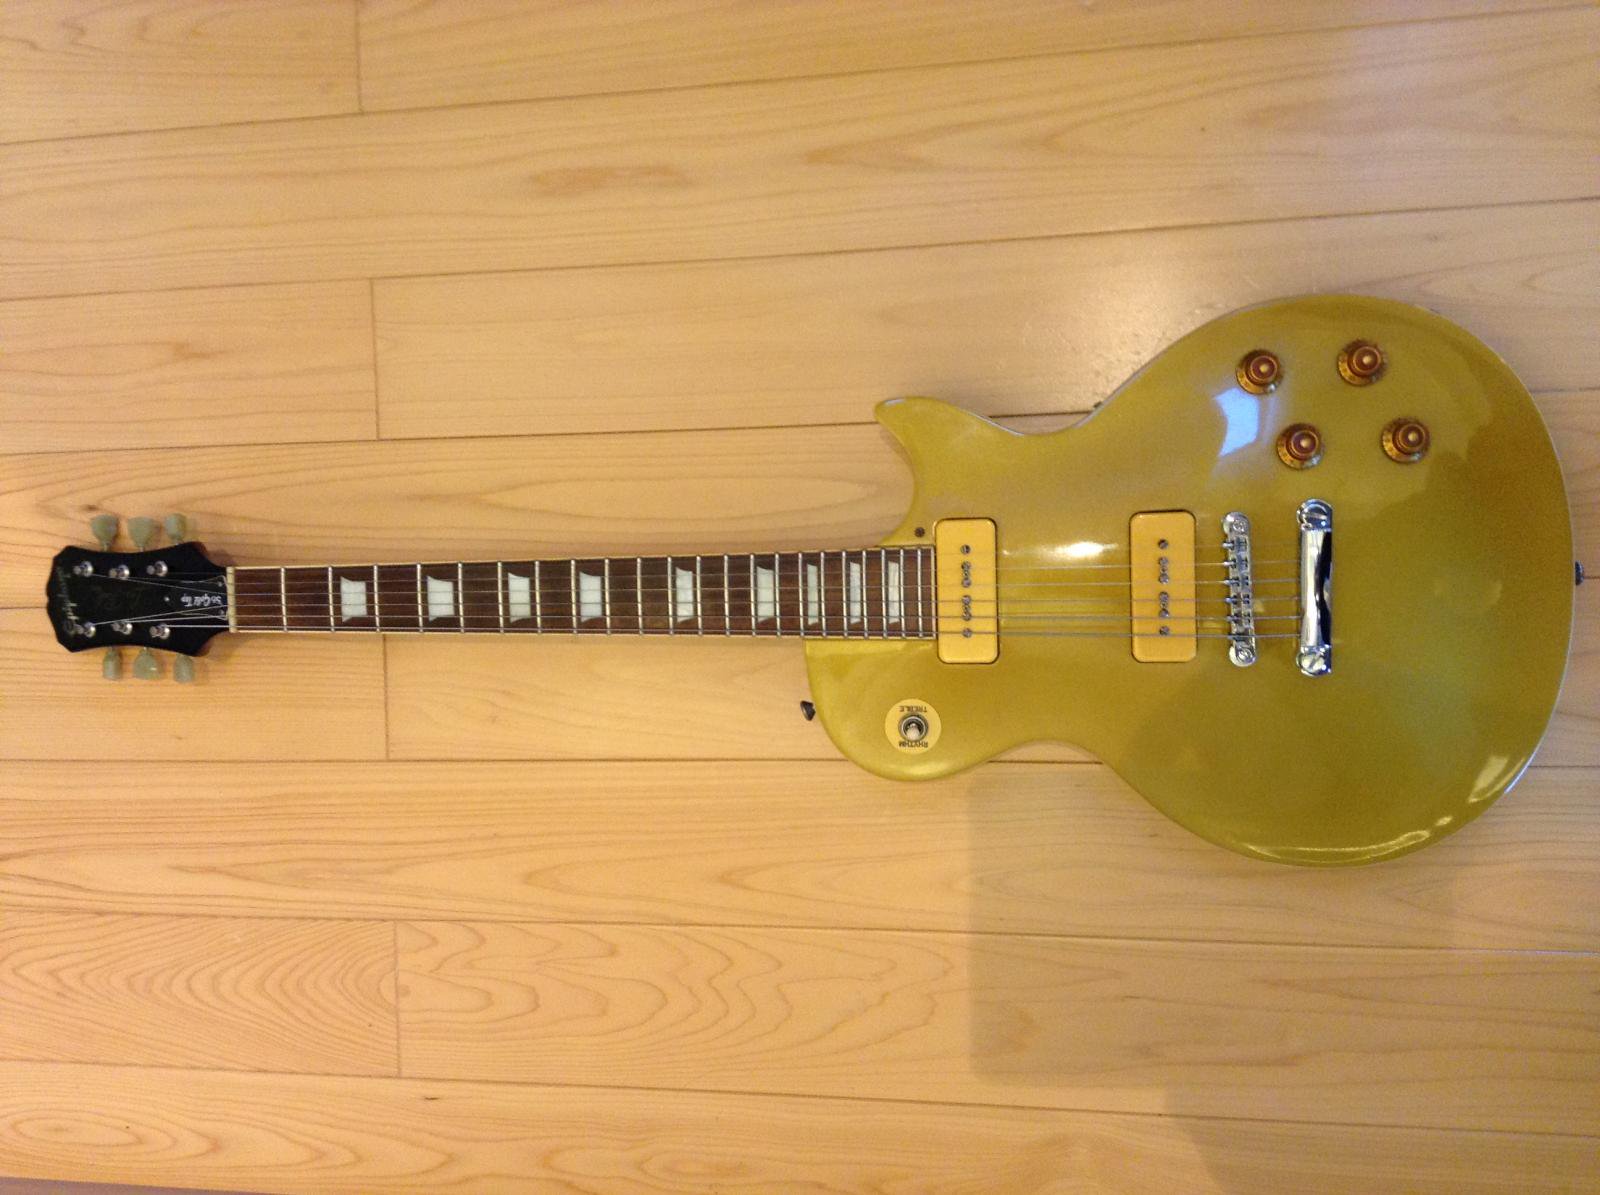 Epiphon ｴﾋﾟﾌｫﾝ Les Paul 56 Gold Top 人気限定モデル 年末特価 ｃ ｉ ｋ ｃustom ｉnstrument ｋ 富山県砺波市でギター等の楽器を販売 買取 修理 チューニング カスタマイズしてます